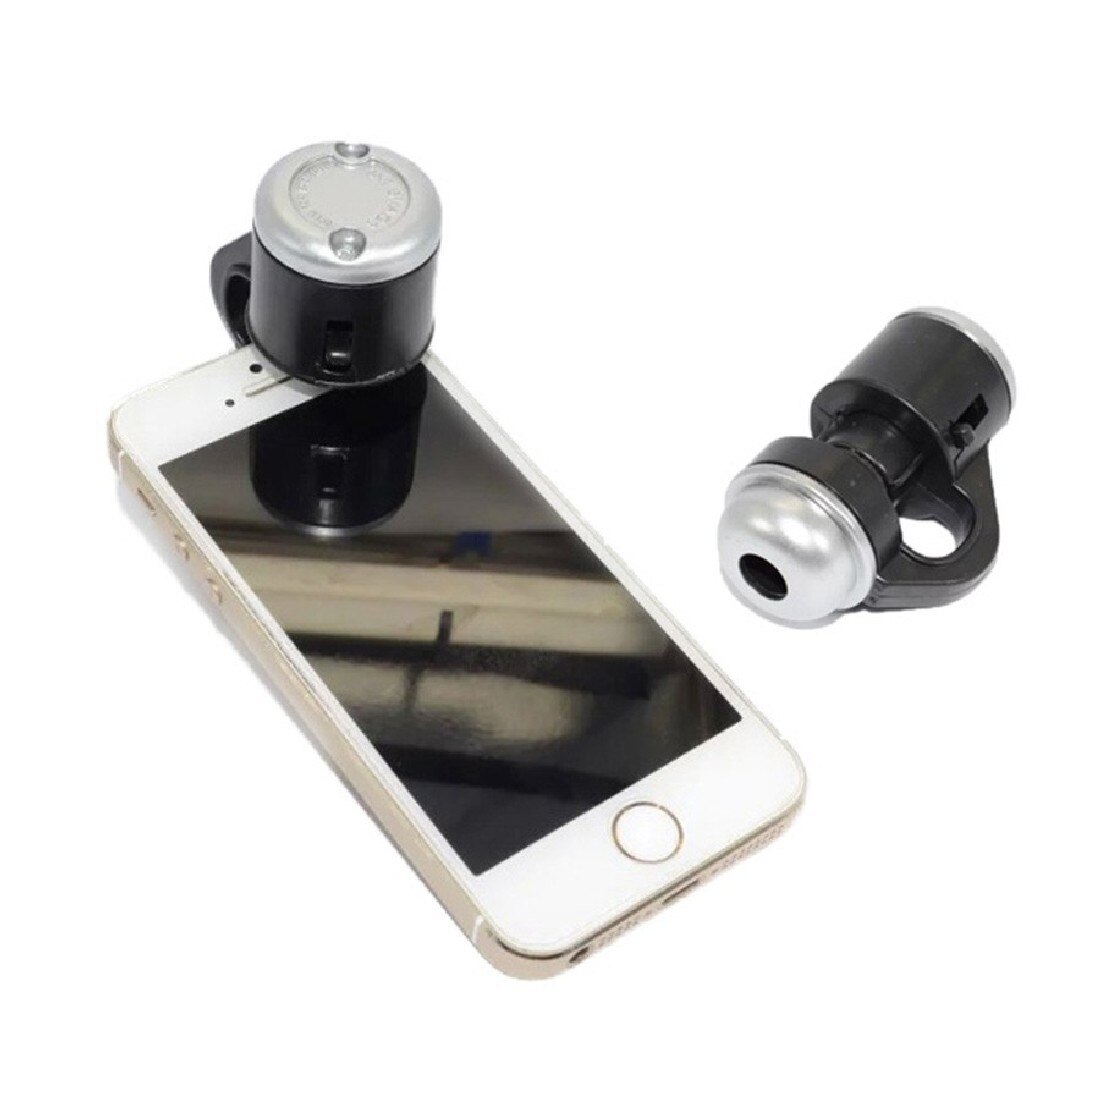 1pc universal 30x optisk zoom mobiltelefon mikroskop klip mikro linse teleskop kamera linse til iphone til ipad til samsung